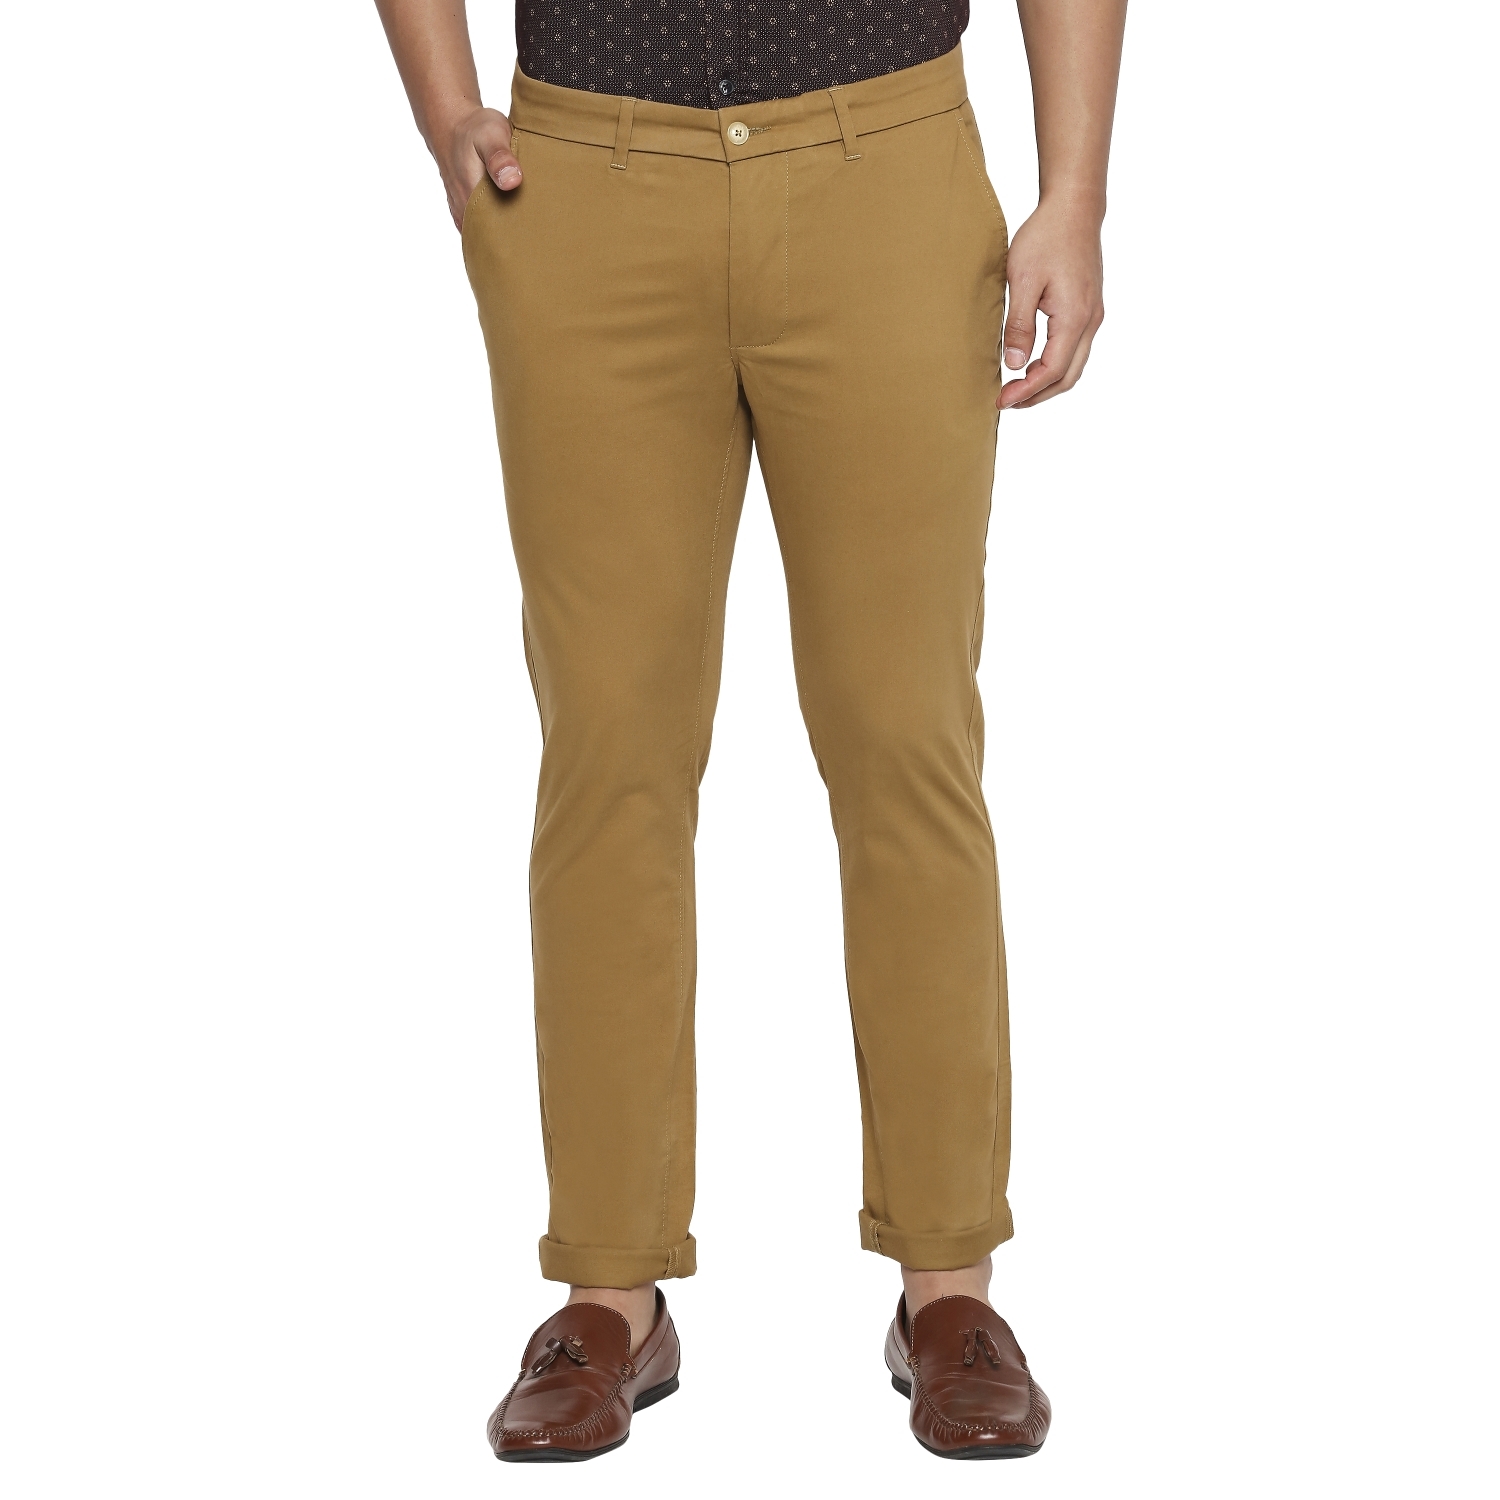 Basics | Basics Tapered Fit Dijon Khaki Stretch Trouser